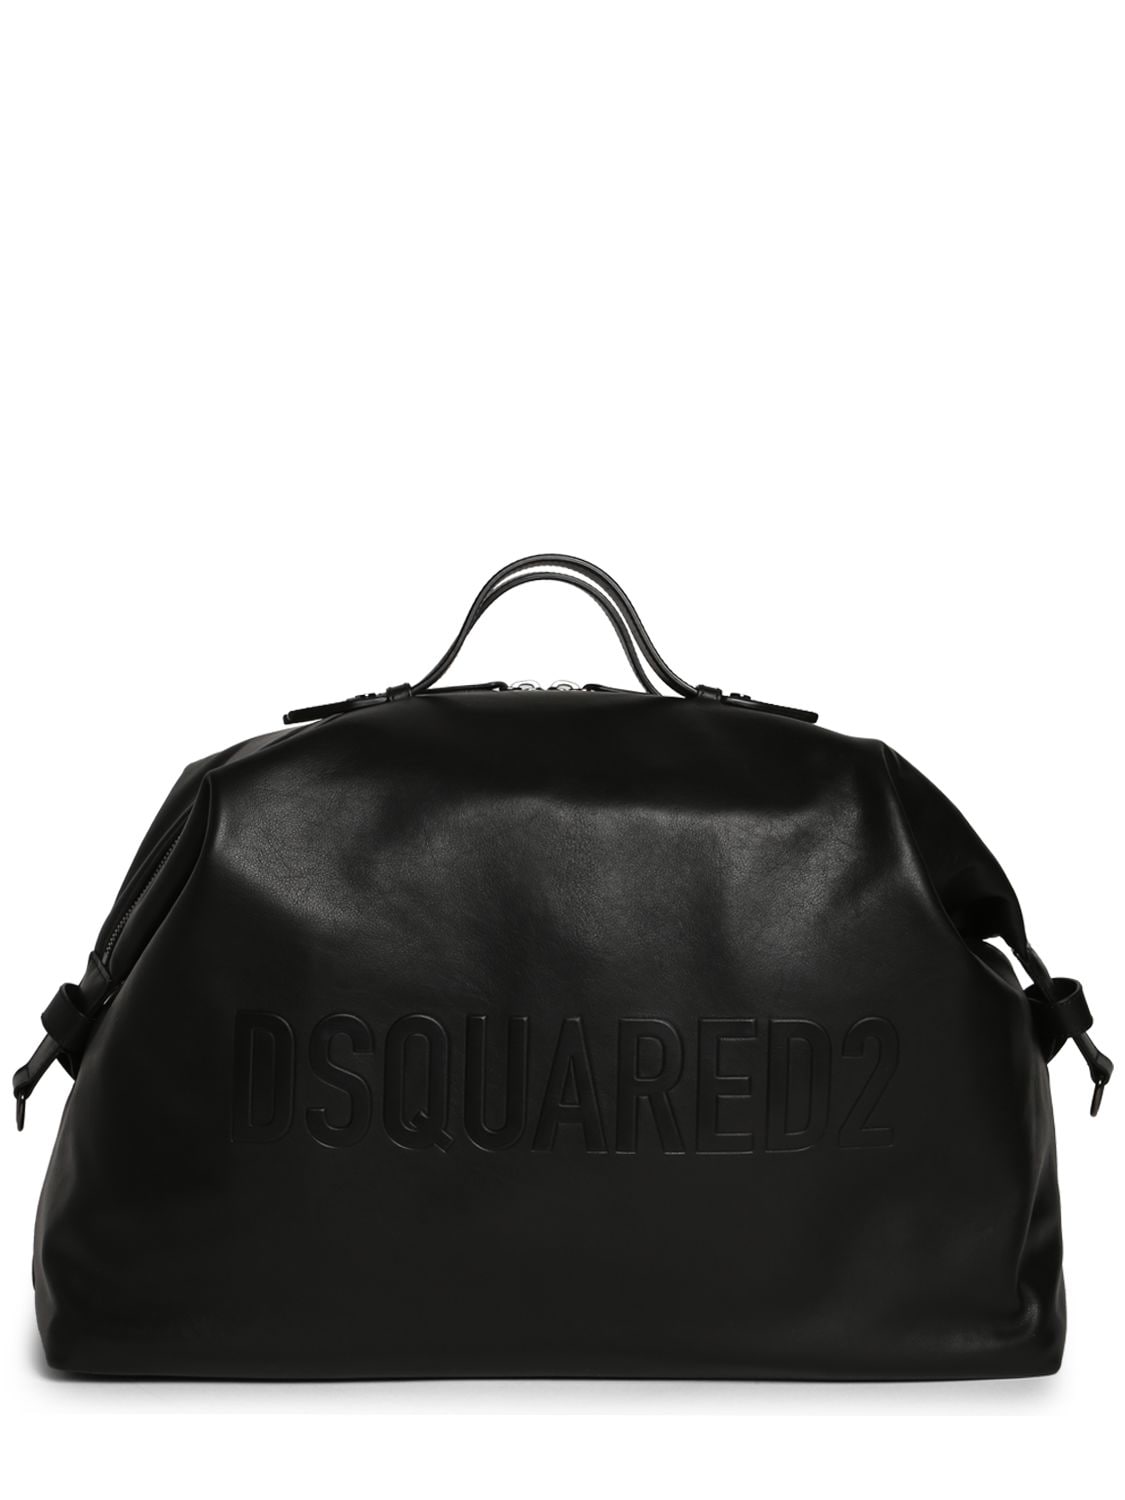 DSQUARED2 Bob Logo Leather Duffle Bag